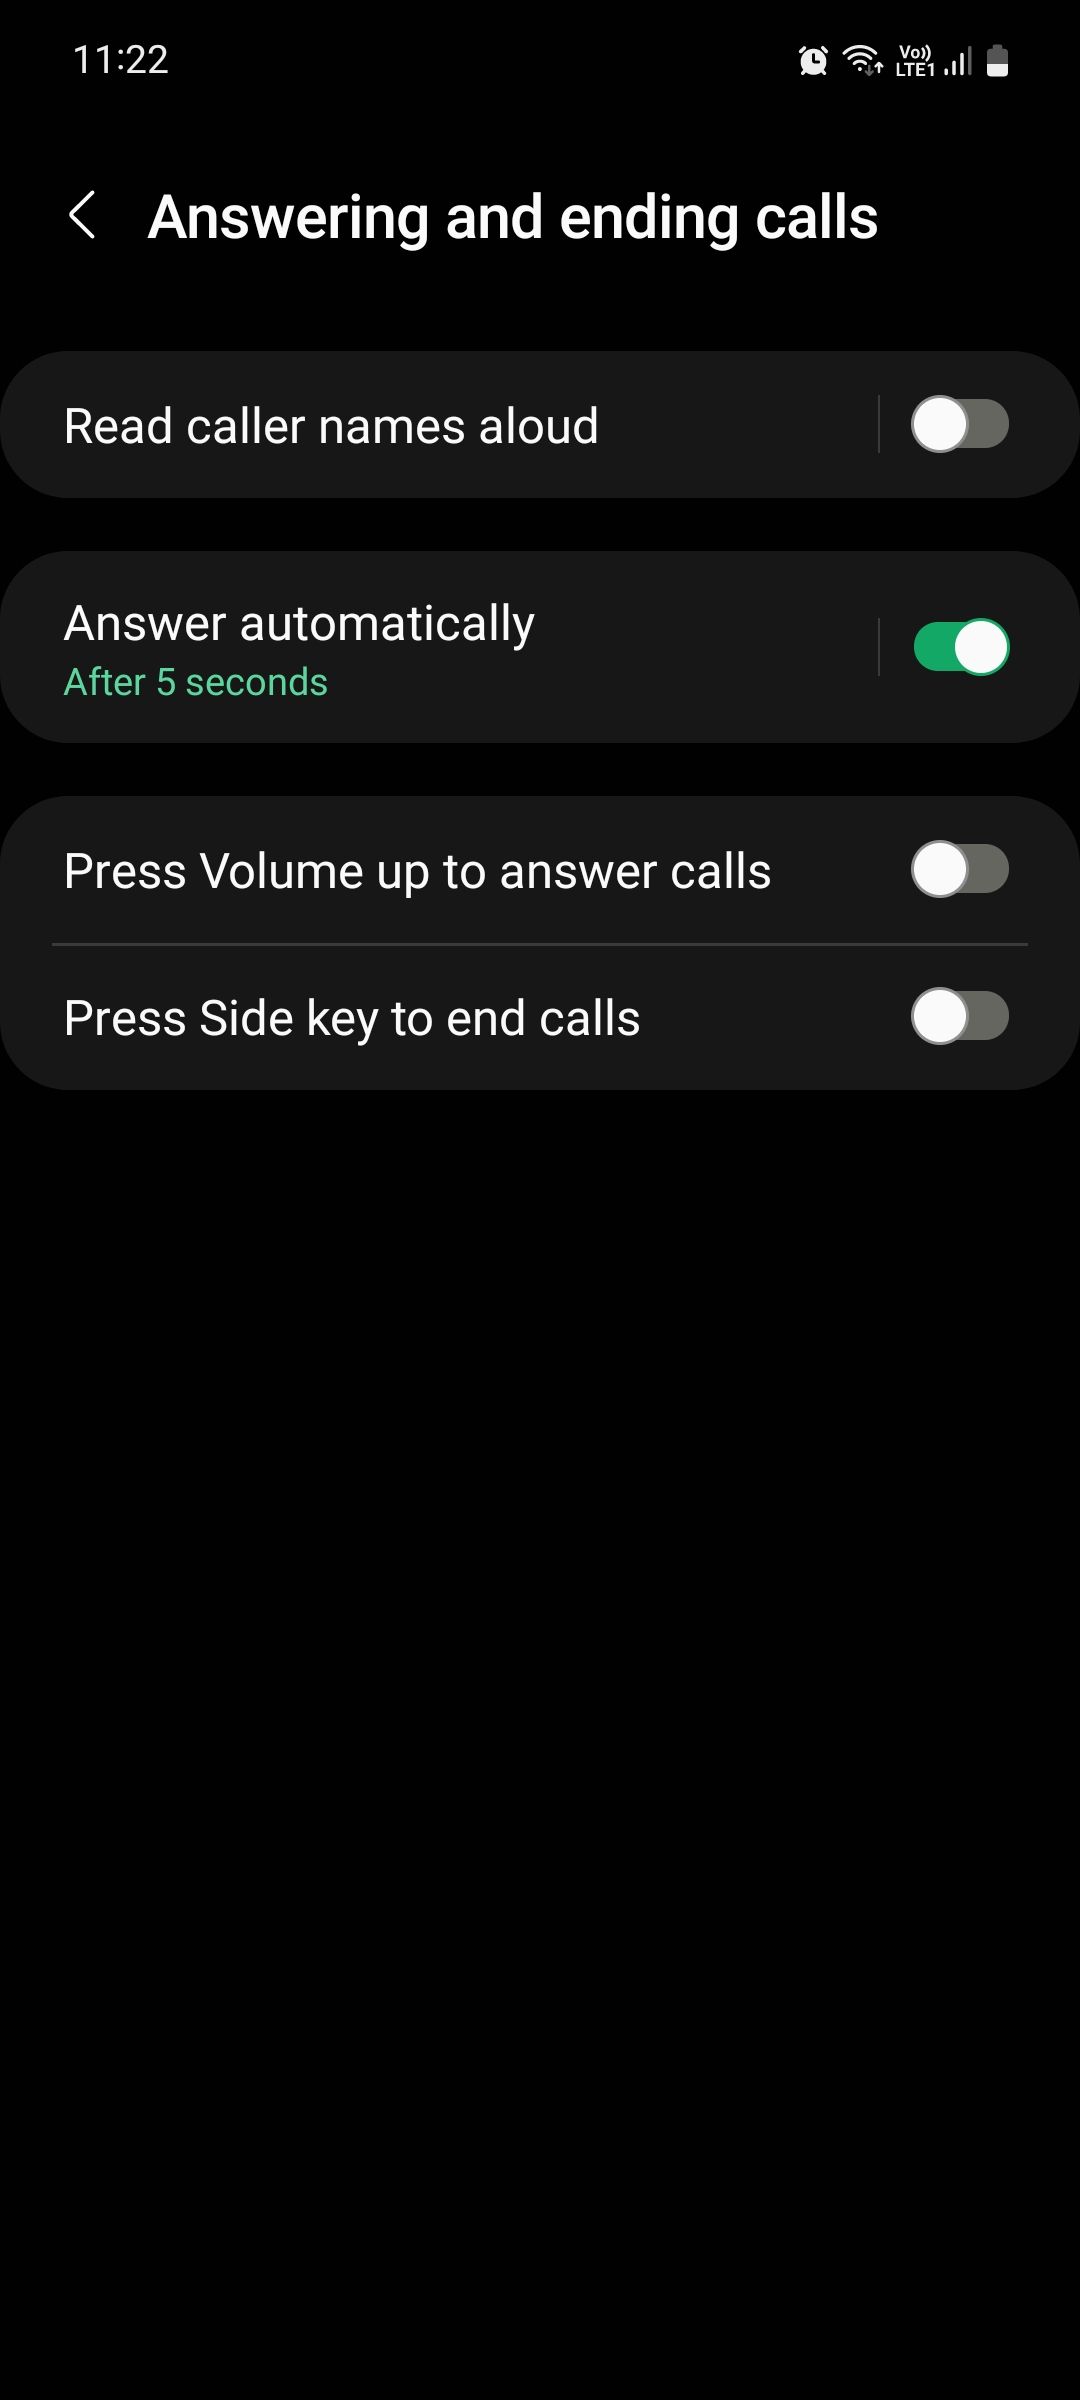 Samsung answering and ending calls